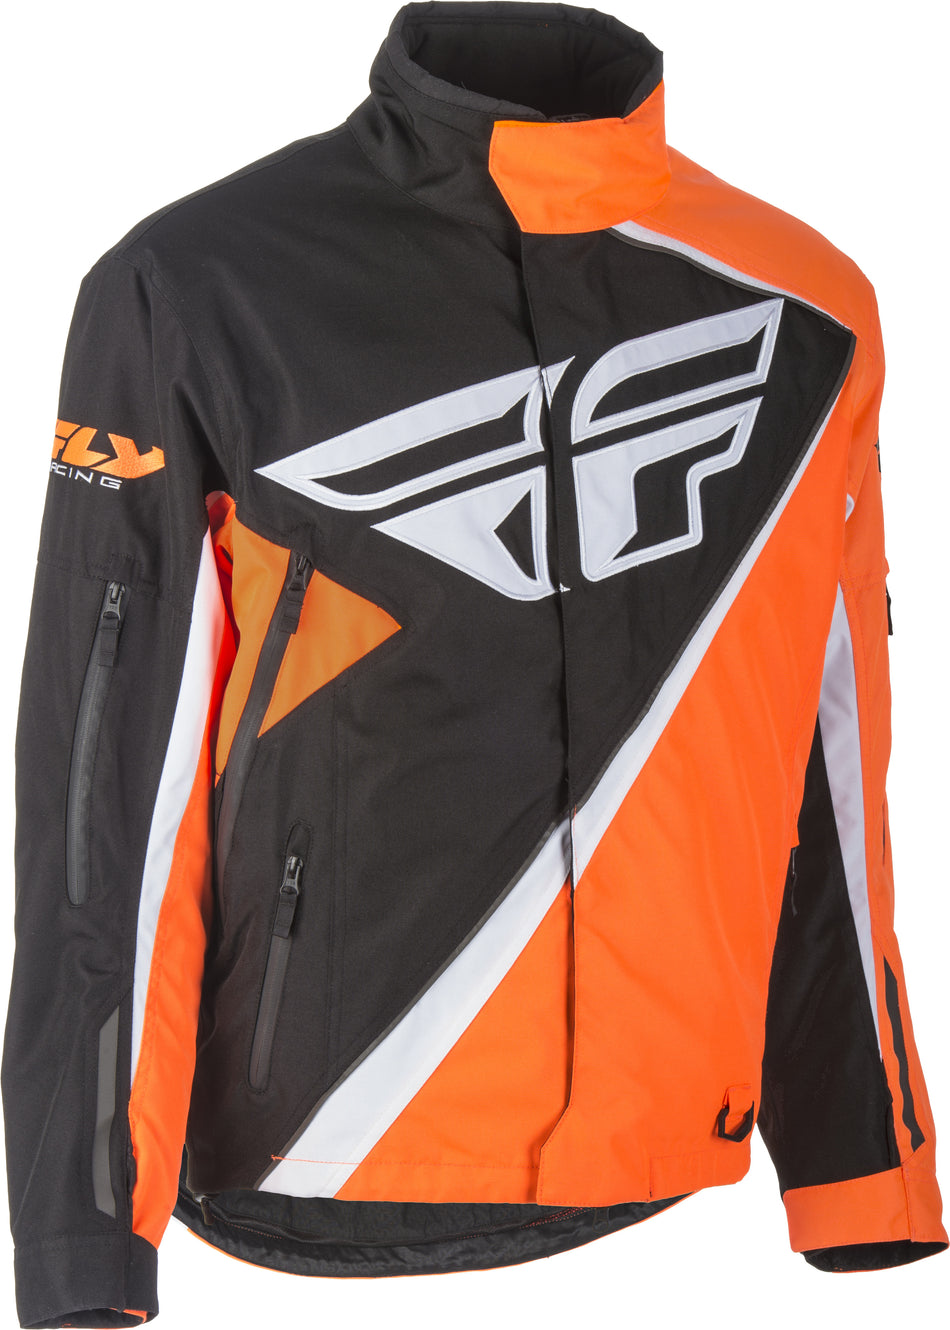 FLY RACING Snx Jacket Orange/Black Sm #6152 470-4078S